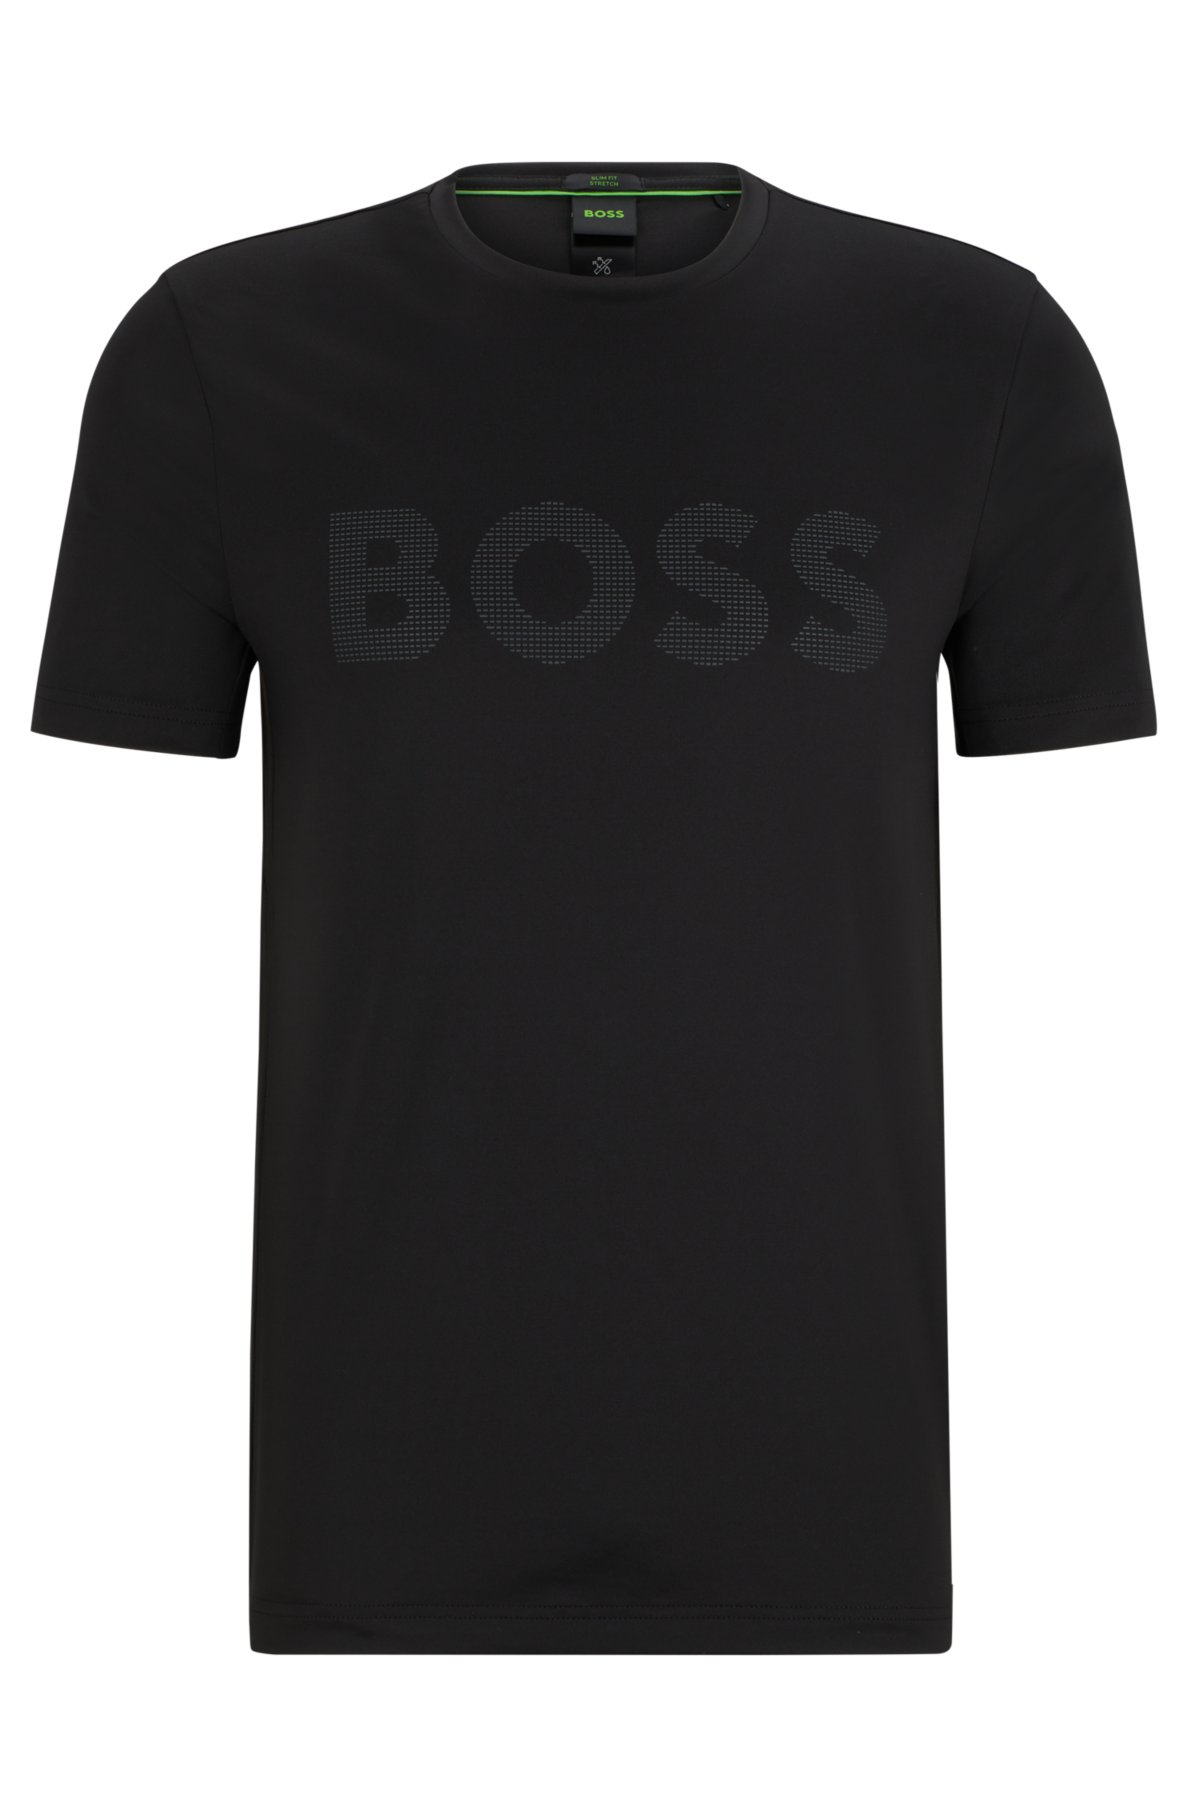 Performance-stretch T-shirt with decorative reflective logo, Black